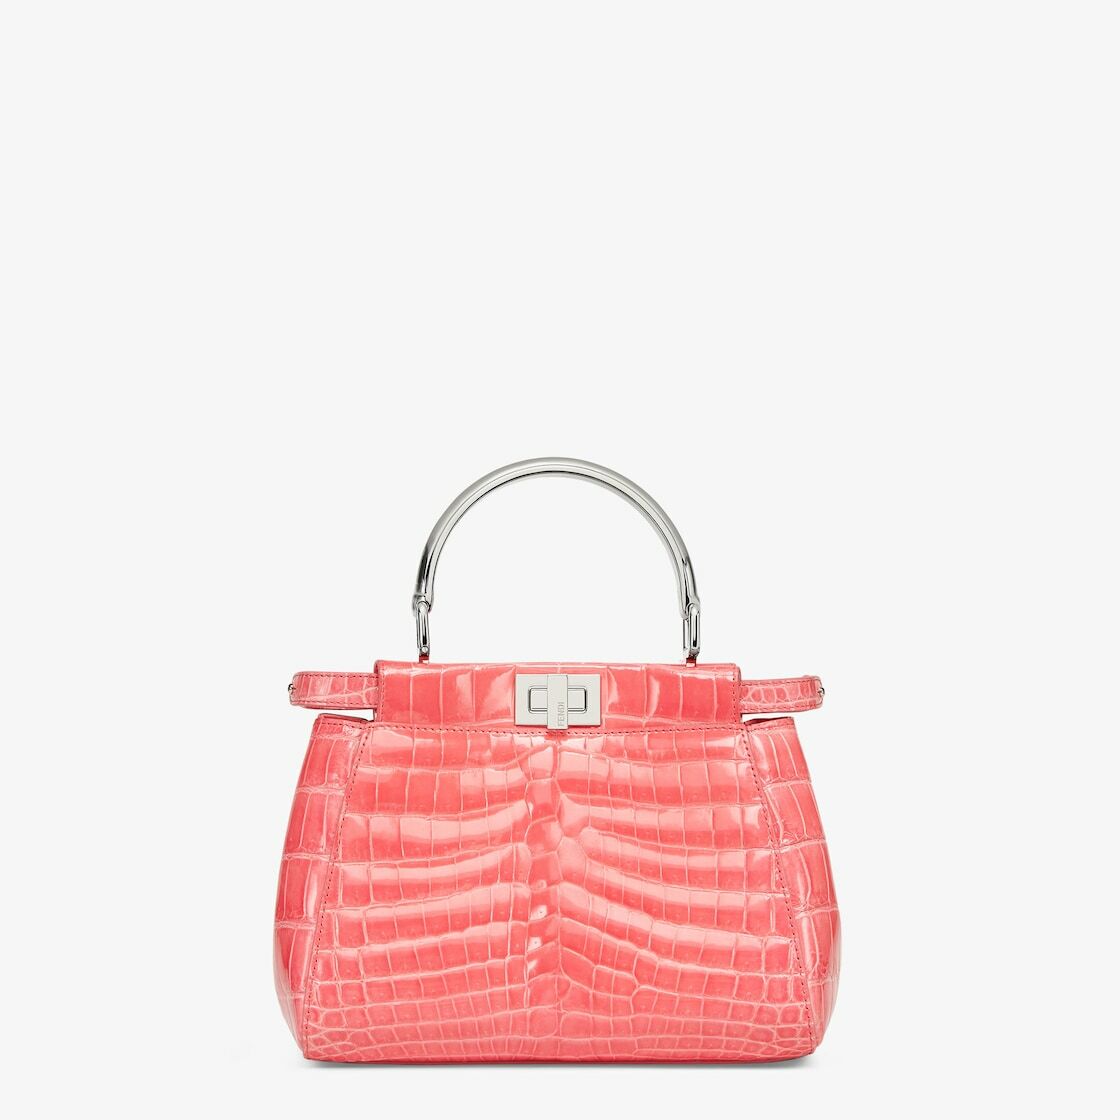 Peekaboo Mini - Pink crocodile leather bag